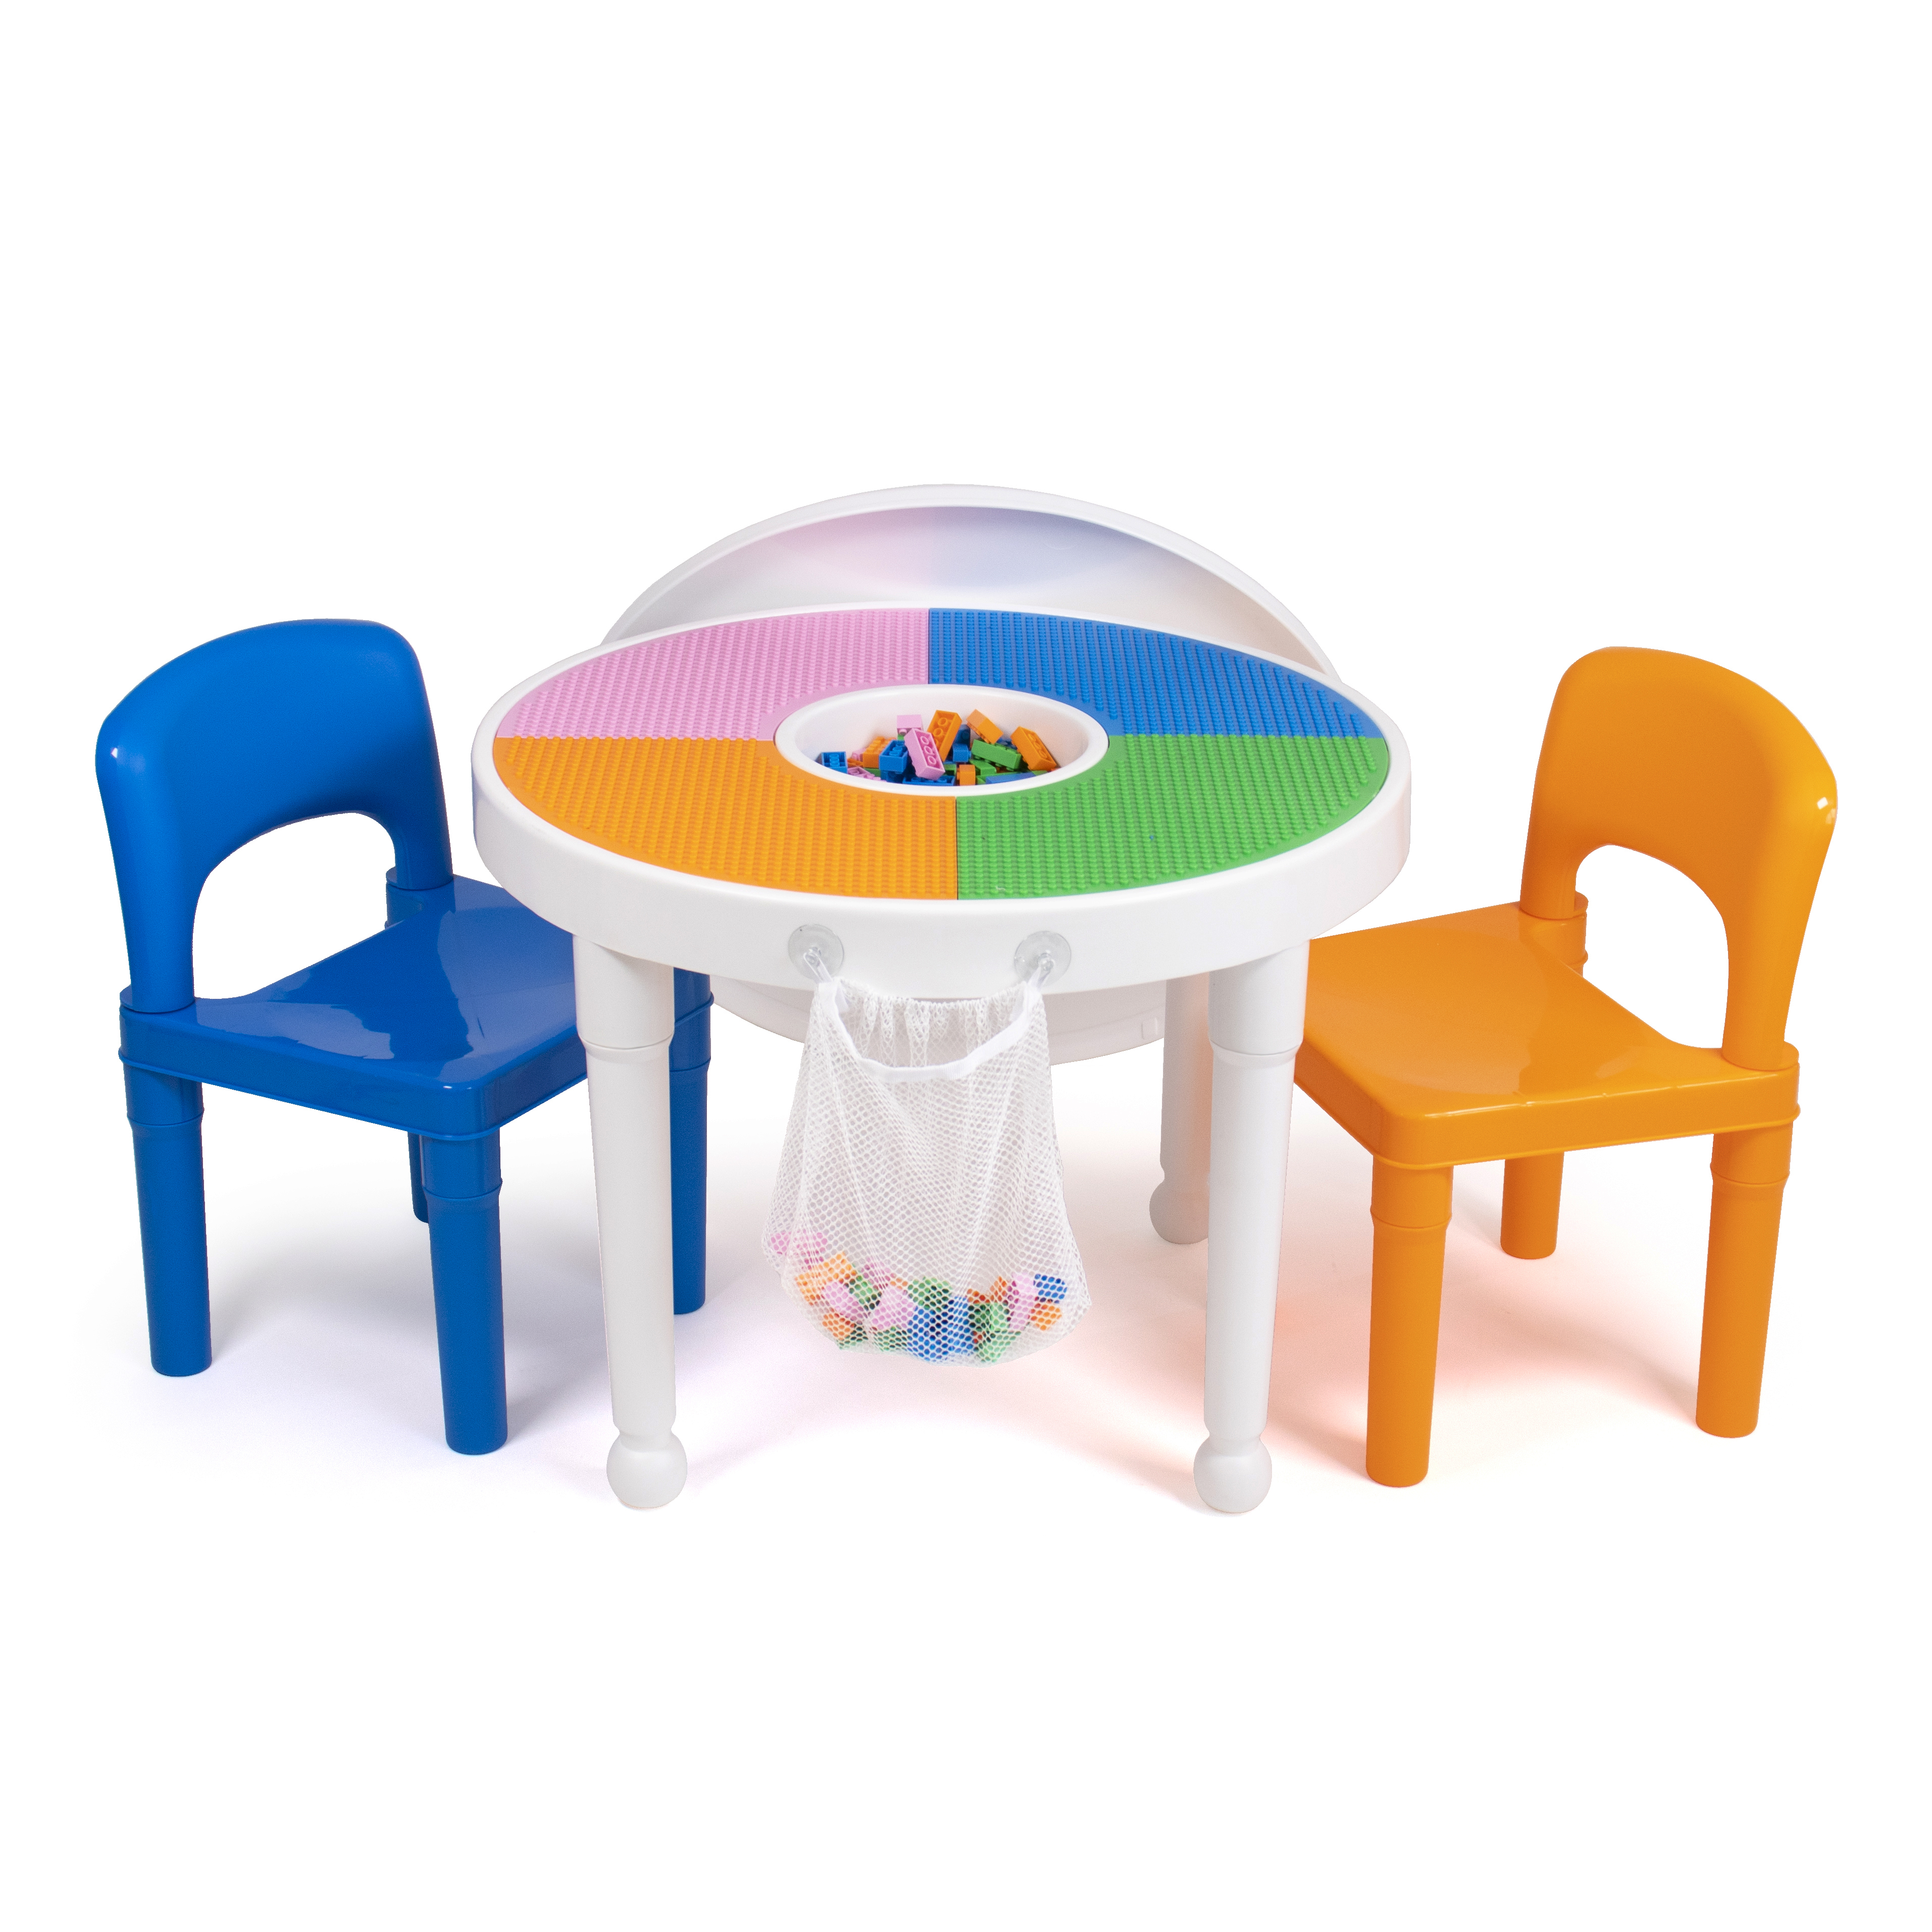 Humble Crew Kids 3pc Plastic Dry-Erase Activity Table & Chair Set with 100 Building Blocks, White, Orange, Blue - image 3 of 20